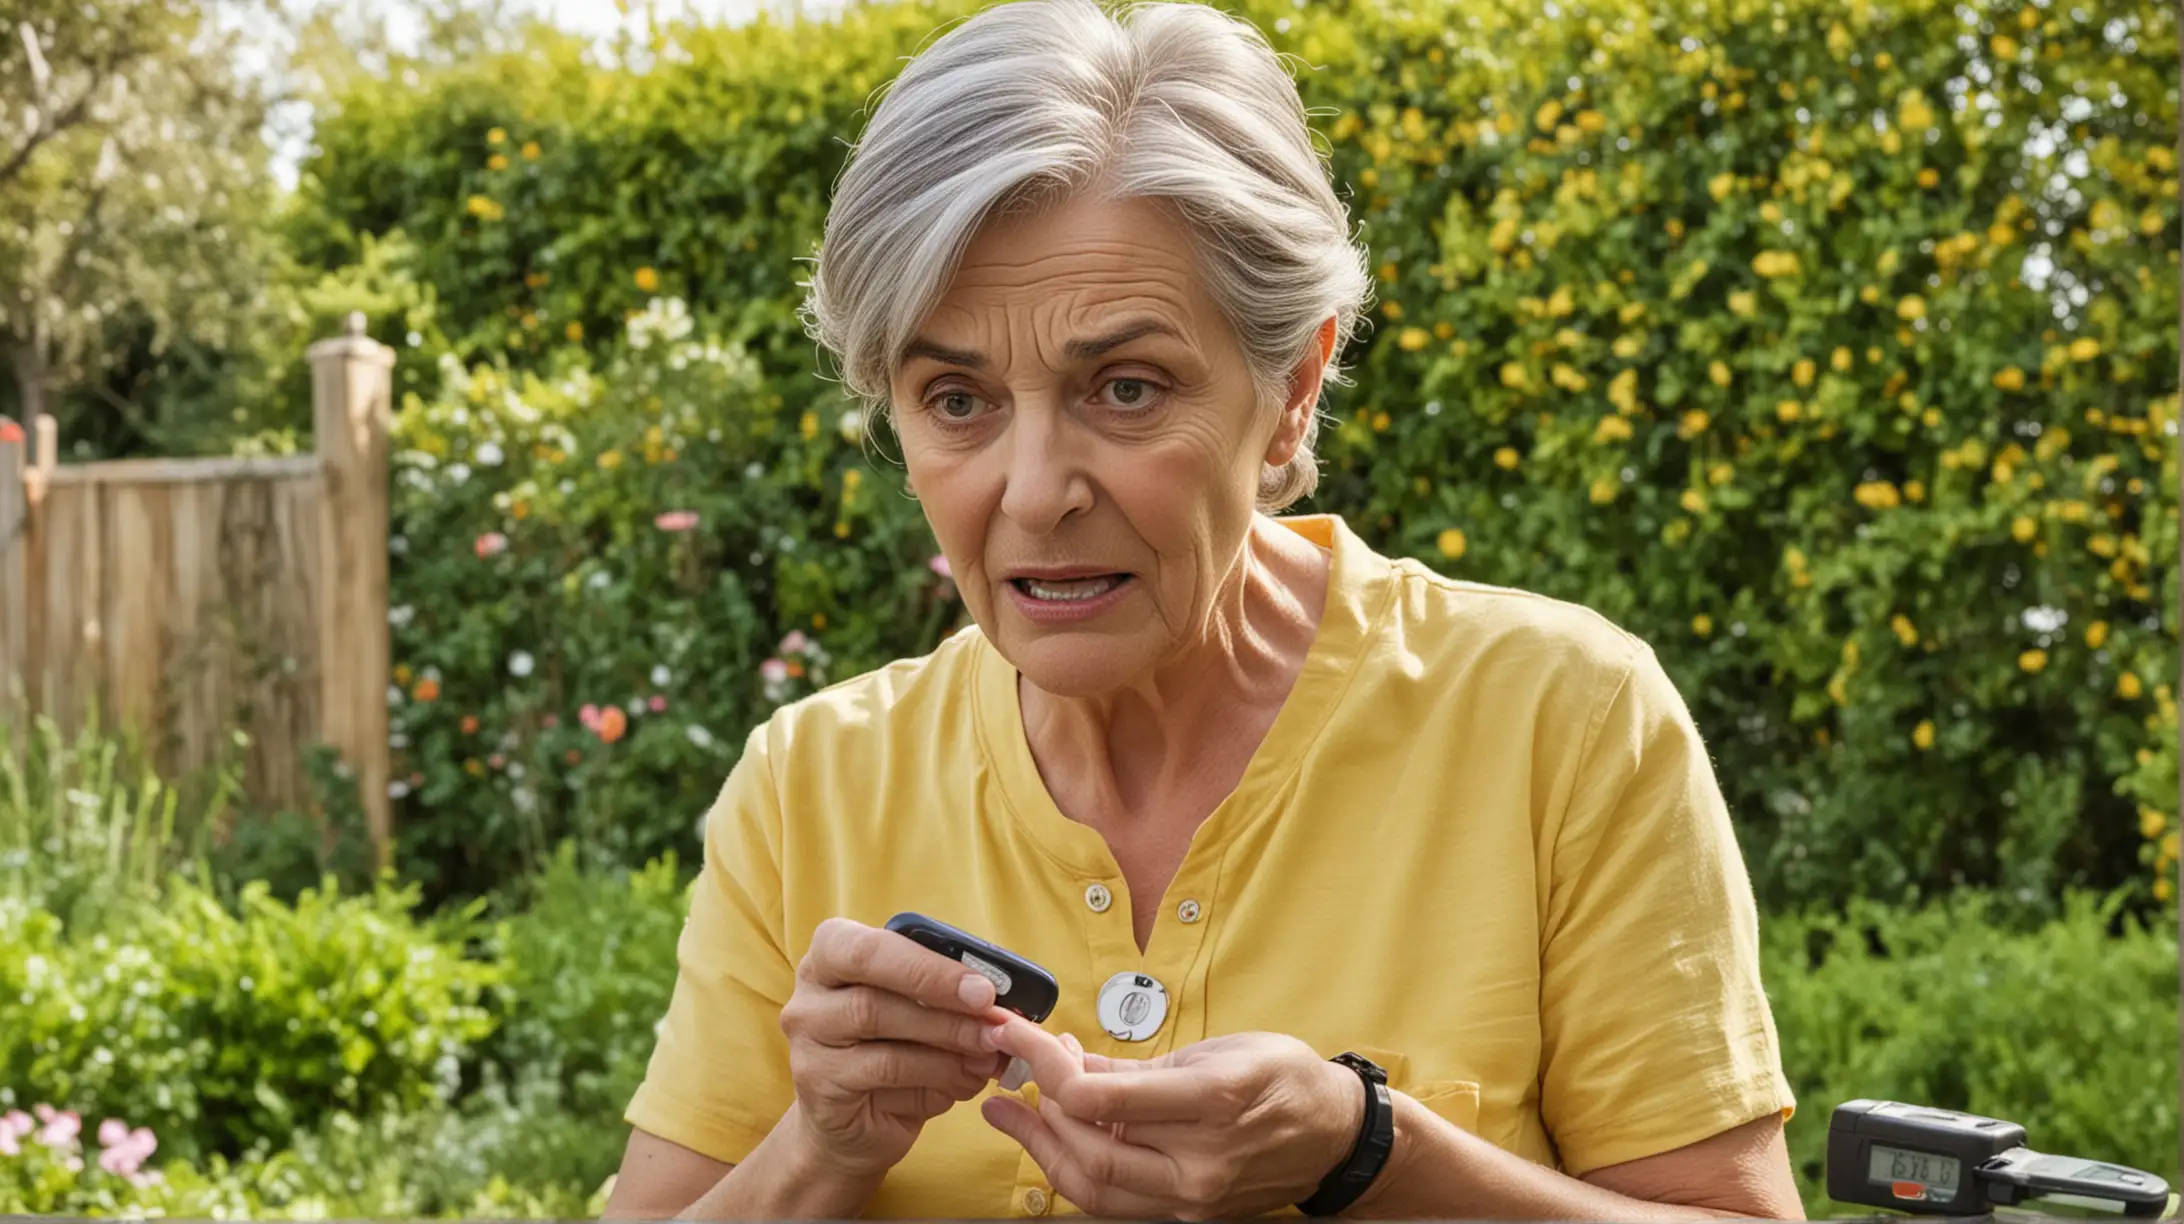 Concerned Older Woman Checking Blood Glucose Meter in Garden Setting